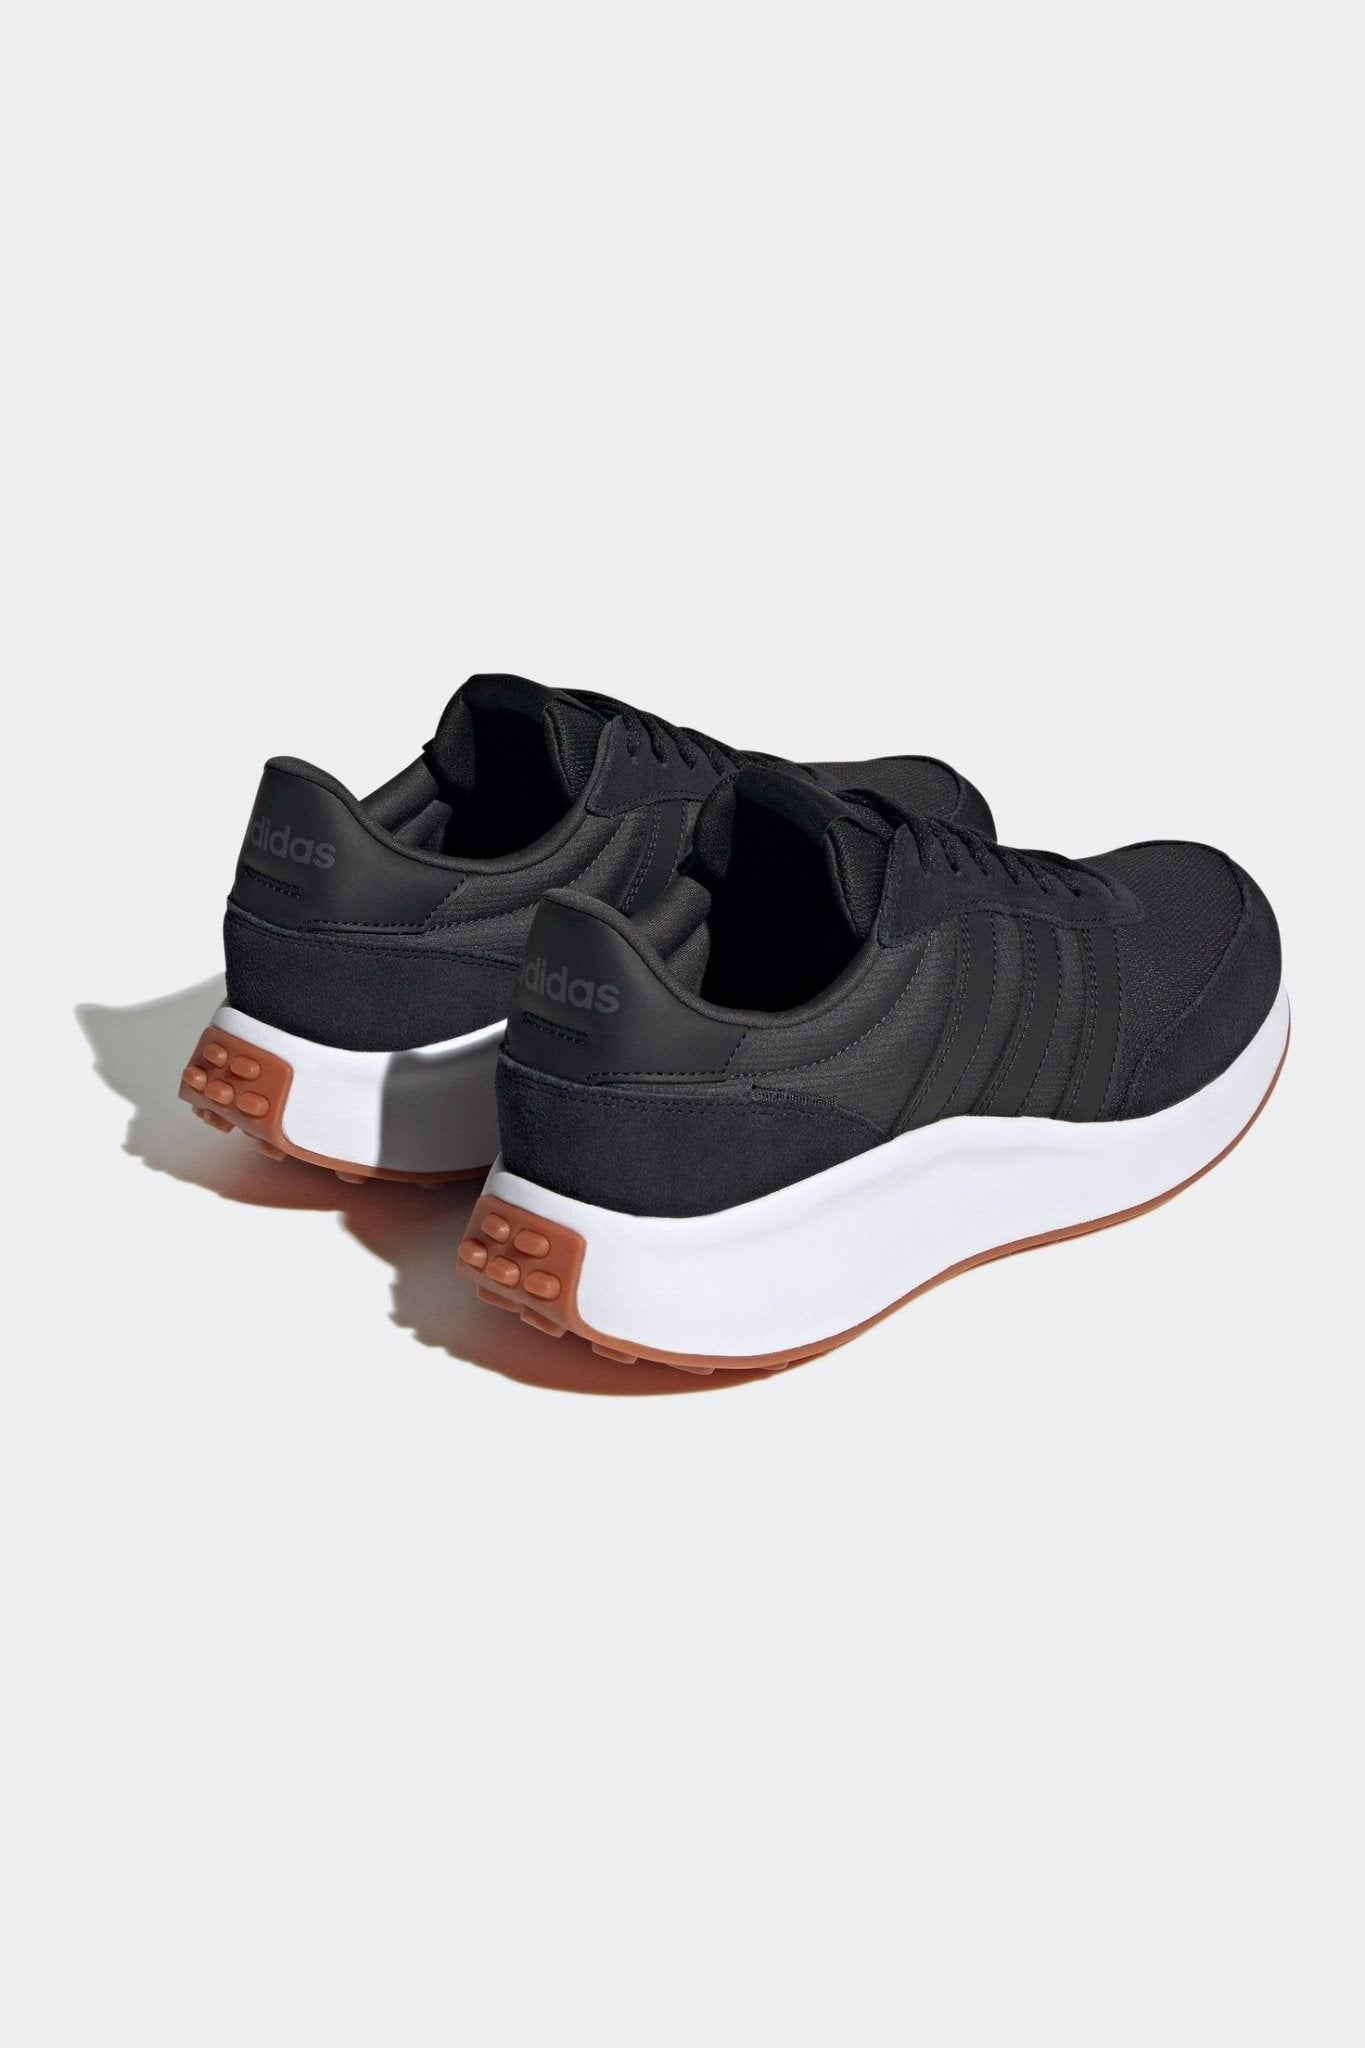 ADIDAS - נעלי ספורט לגבר CARBON בצבע שחור - MASHBIR//365